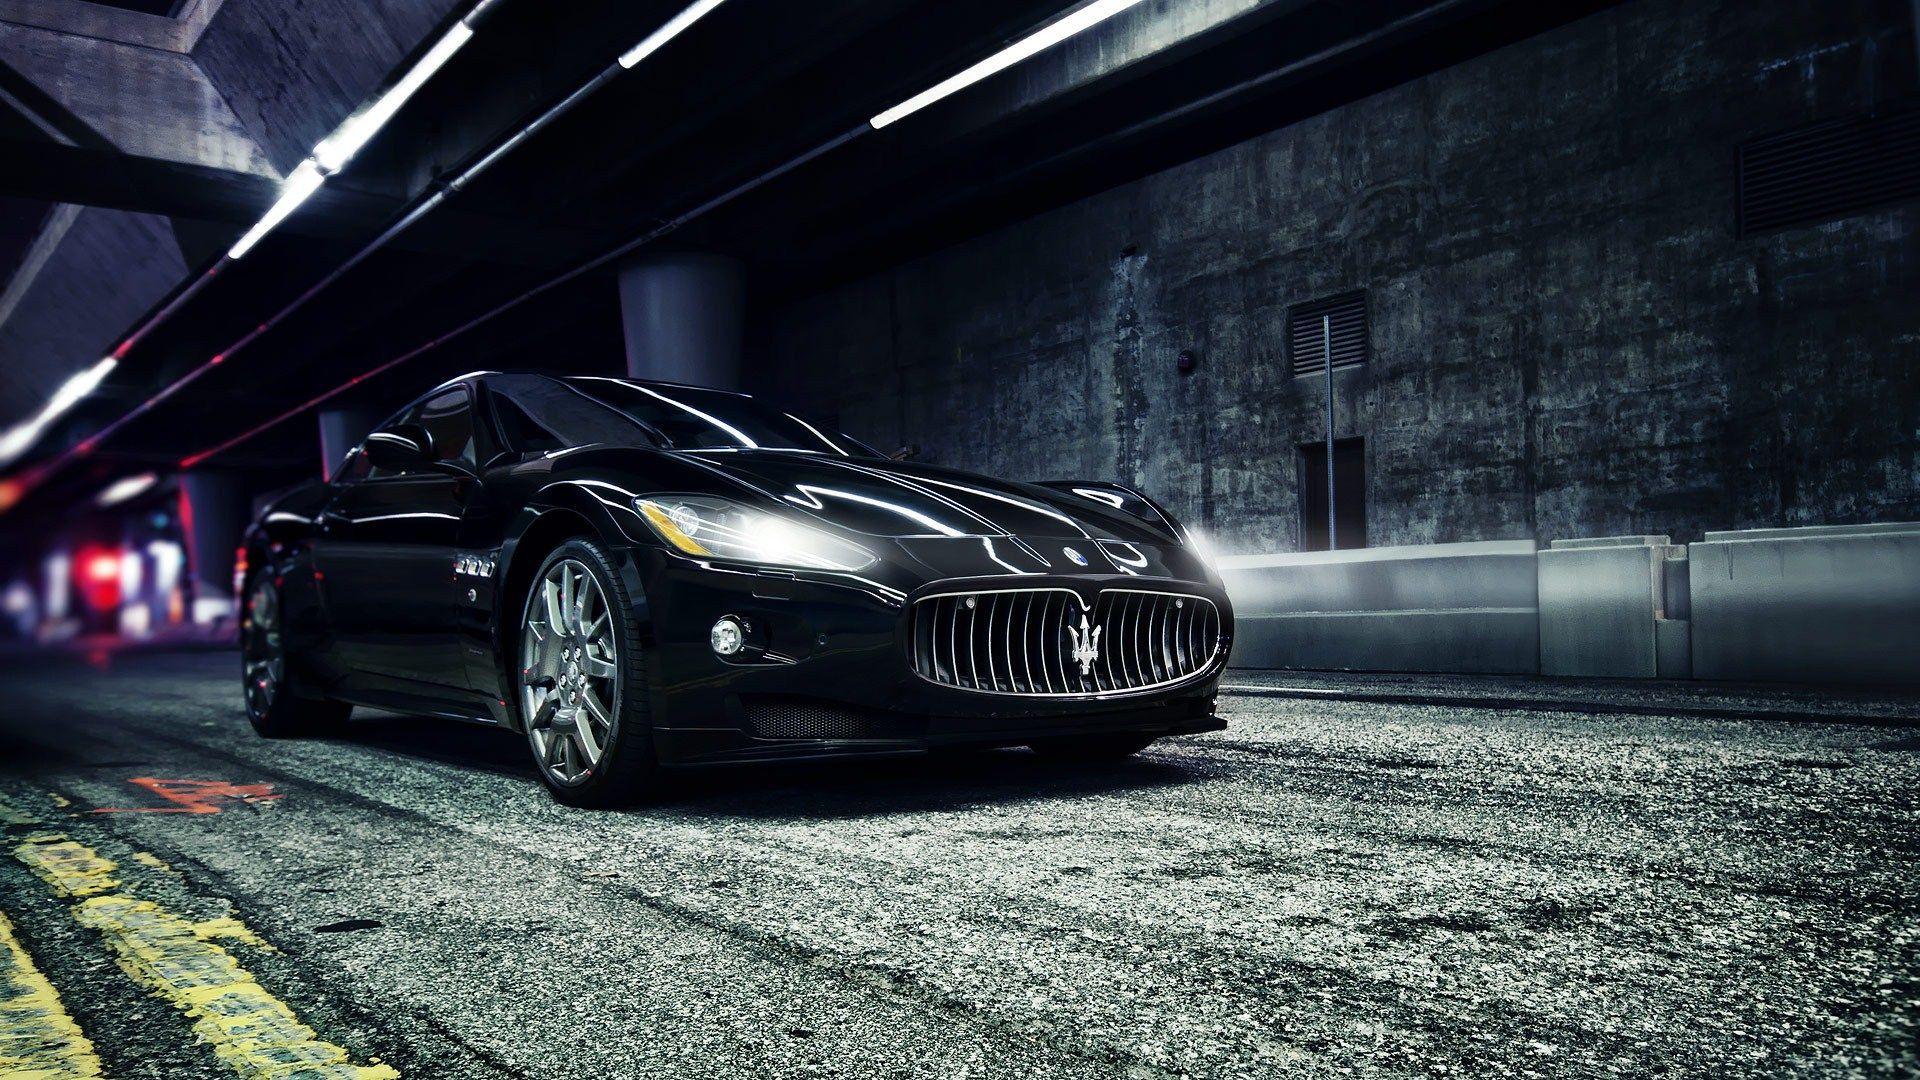 Facts about the Maserati Granturismo. Wallpaper For Desktop